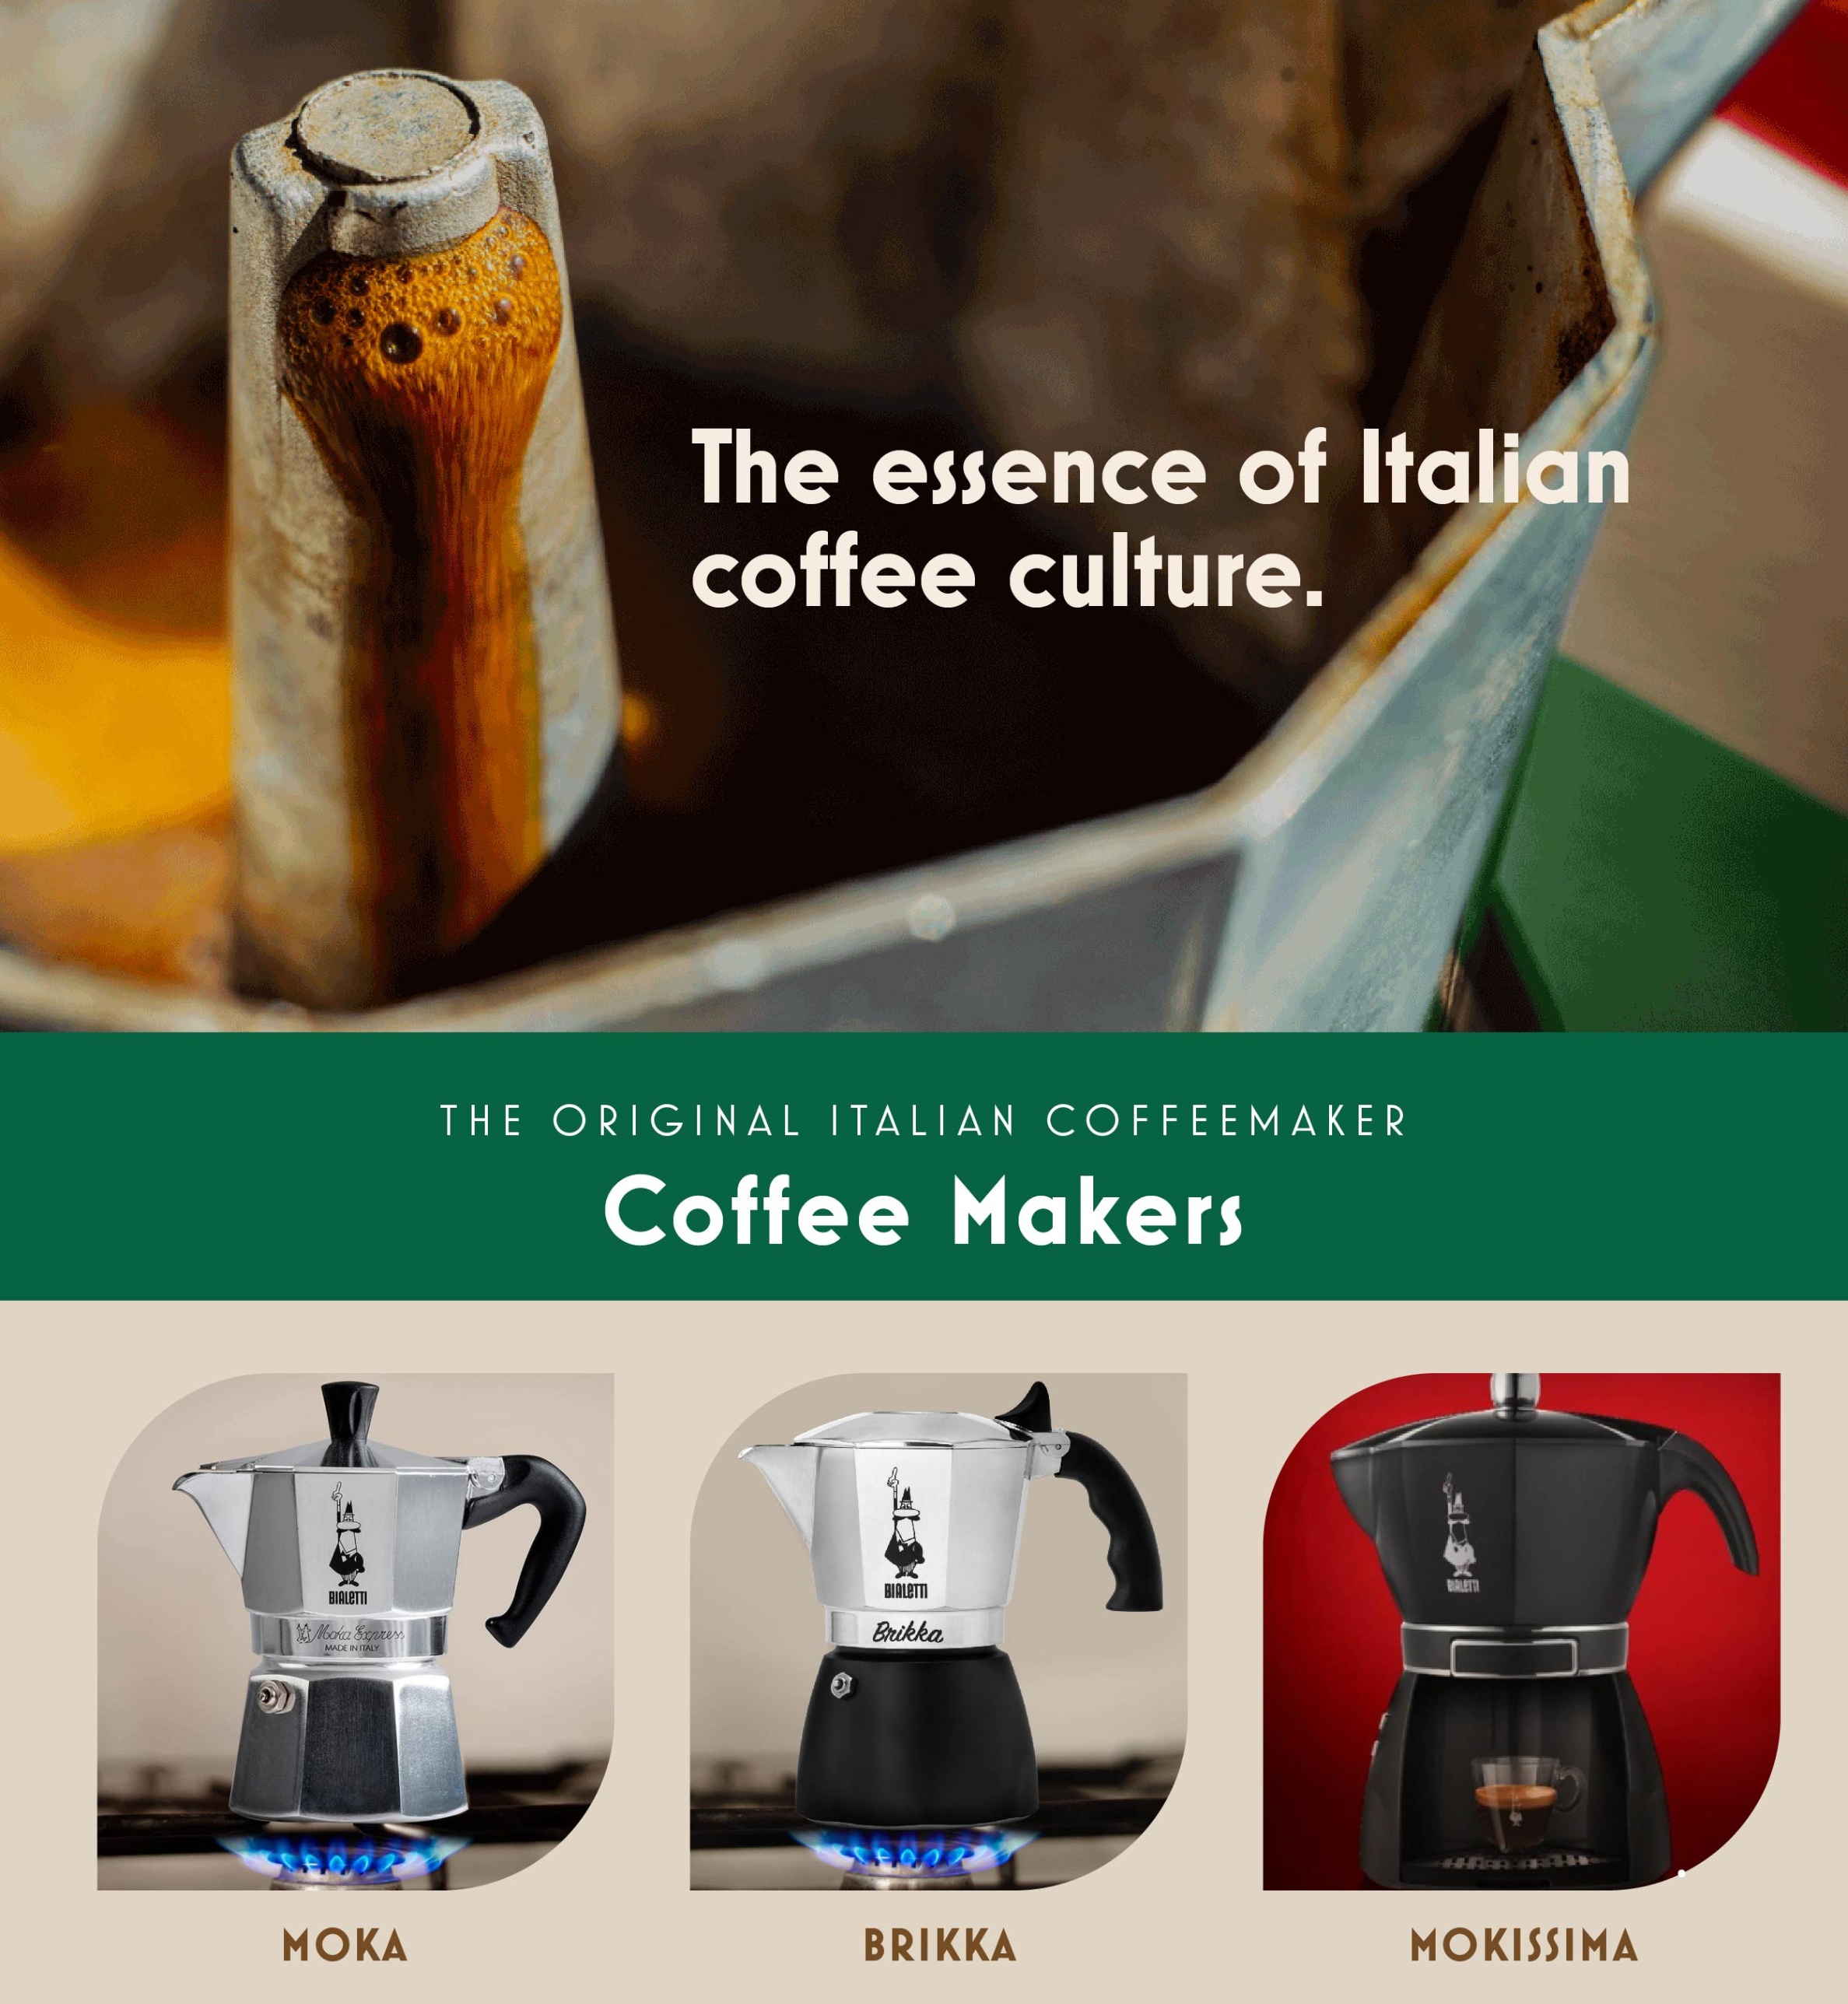 Bialetti MOKA EXPRESS - Essense Coffee